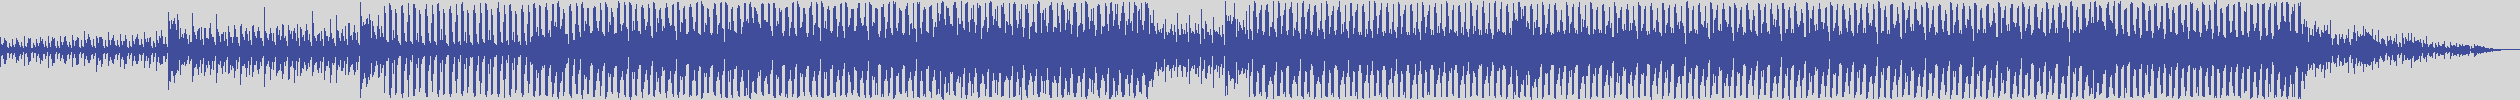 noclouds_chillout [NOC013] Bar Ber - Bisol [Original Mix] audio wave form